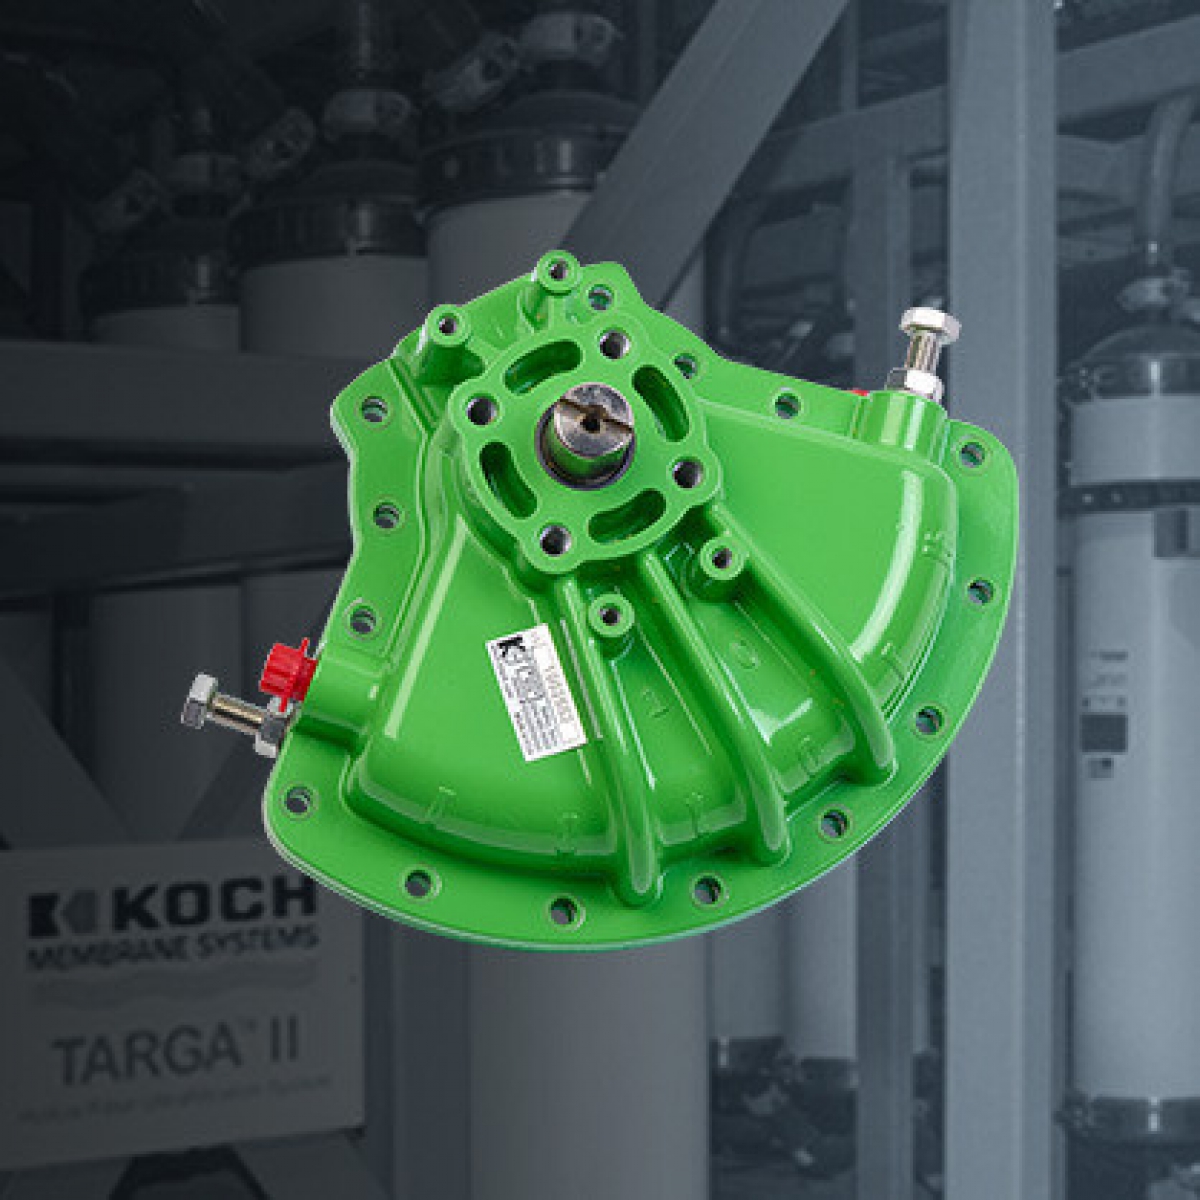 Rotork’s K-TORK Actuator